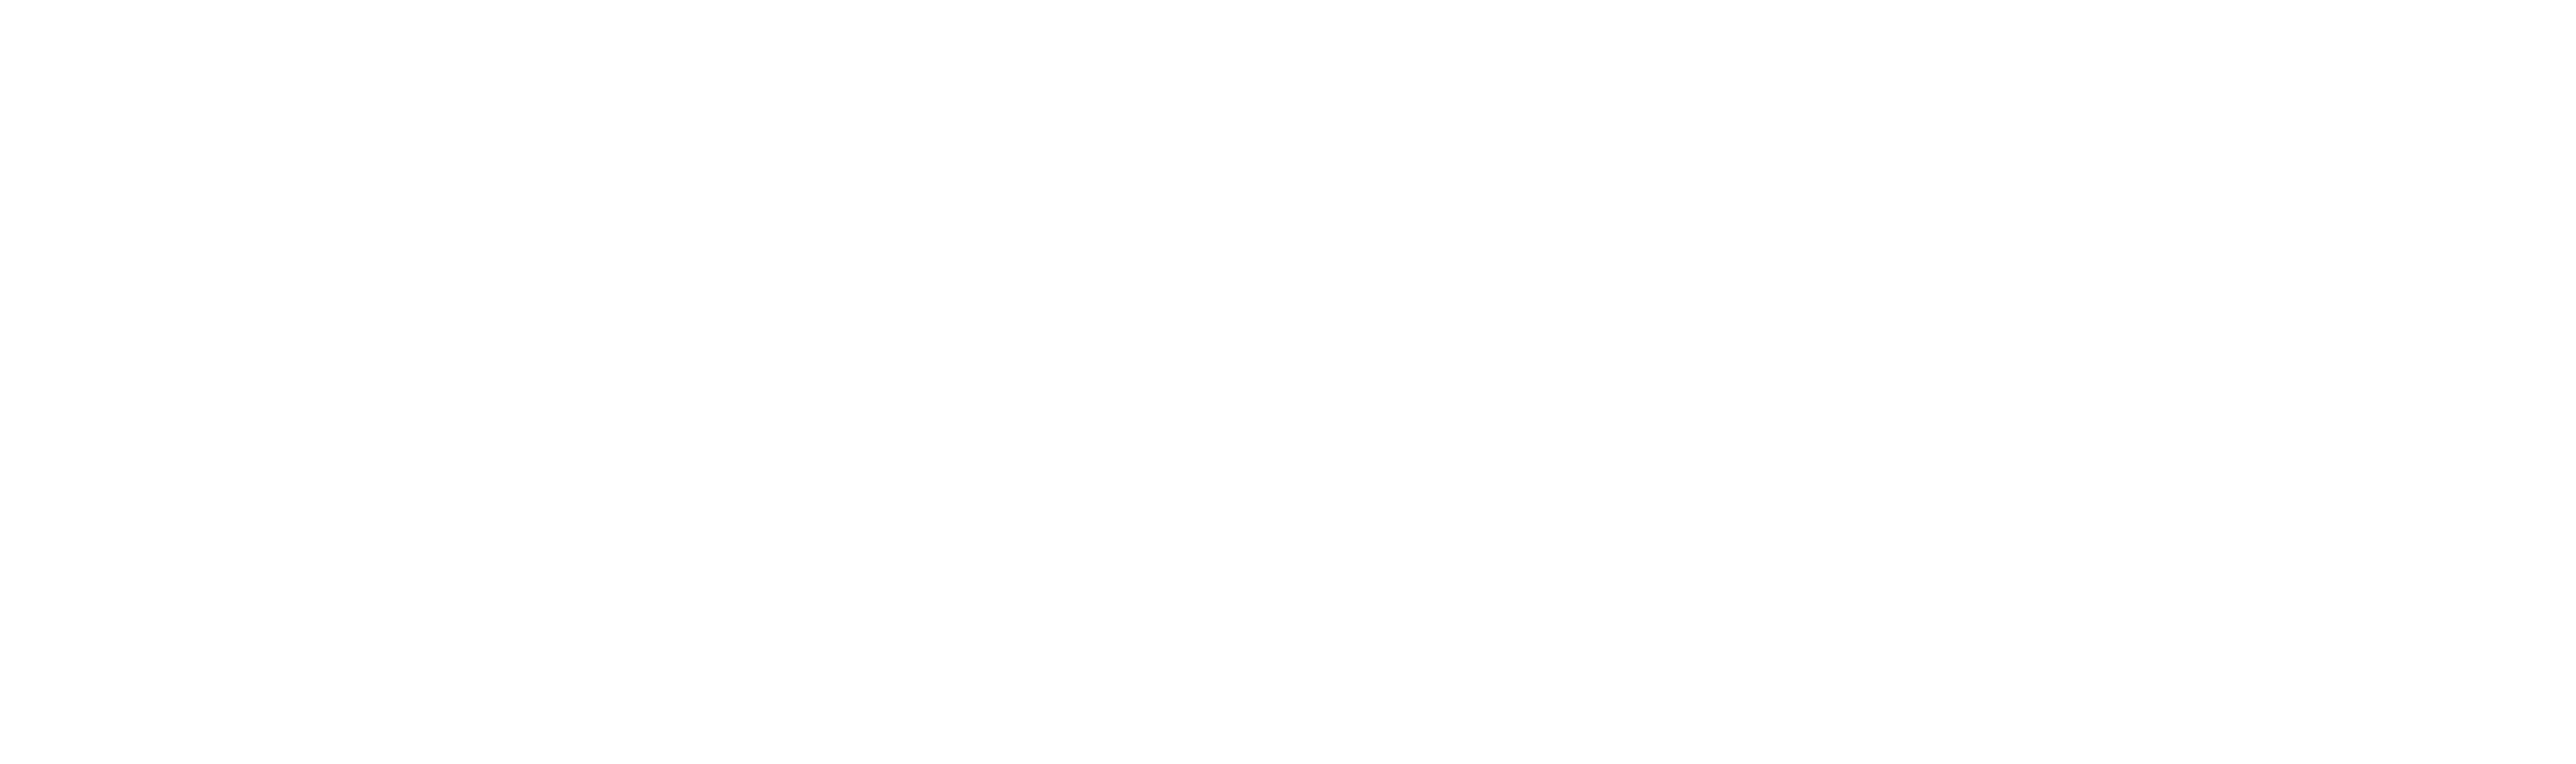 logo-mediclinic-white.png